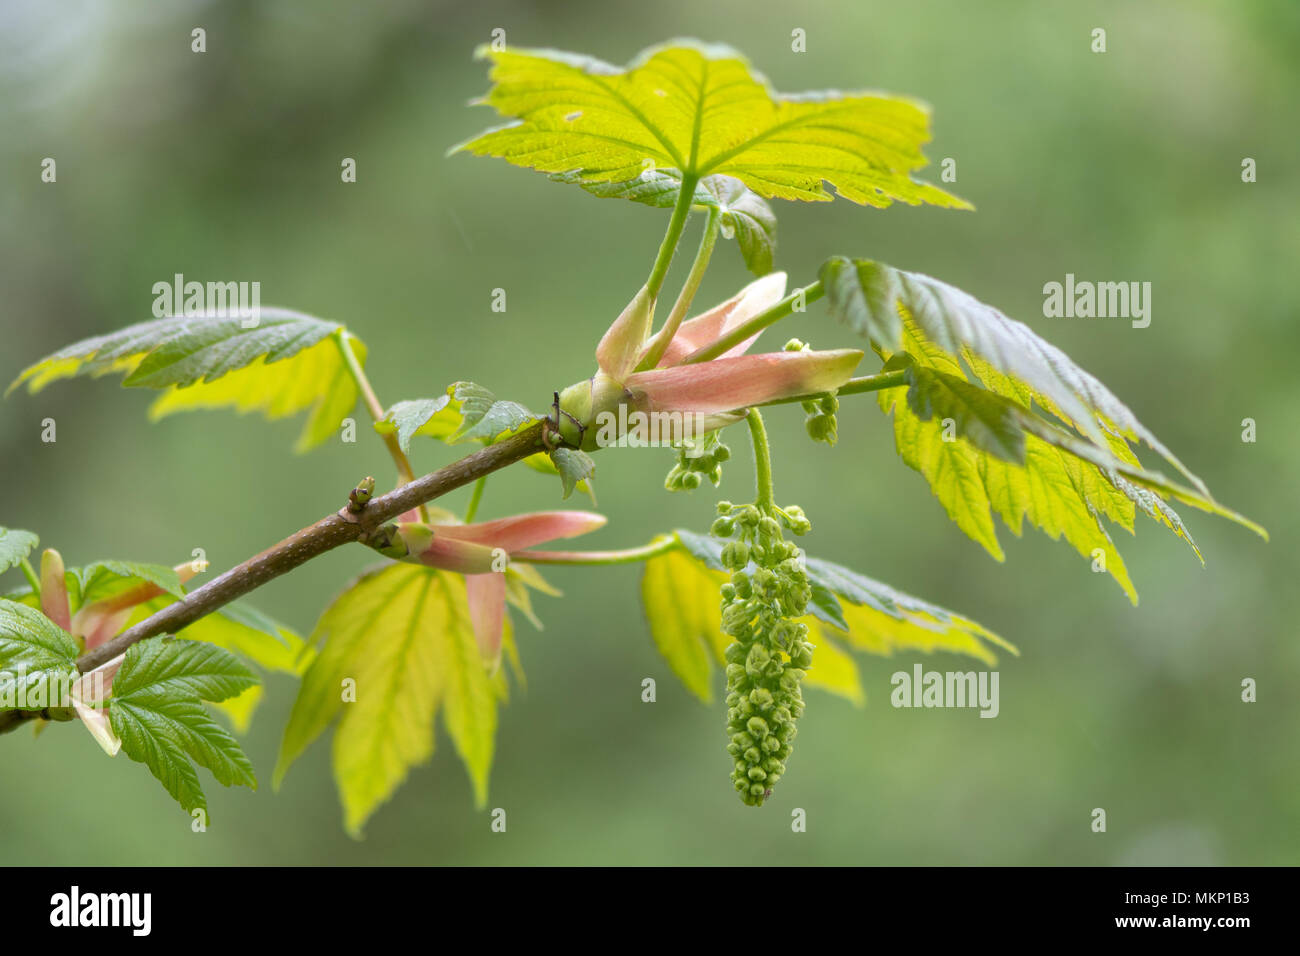 Platano (Acer pseudoplatanus) albero in fiore. Pannocchie di fiori monoica sugli impianti di famiglia Sapindaceae Foto Stock